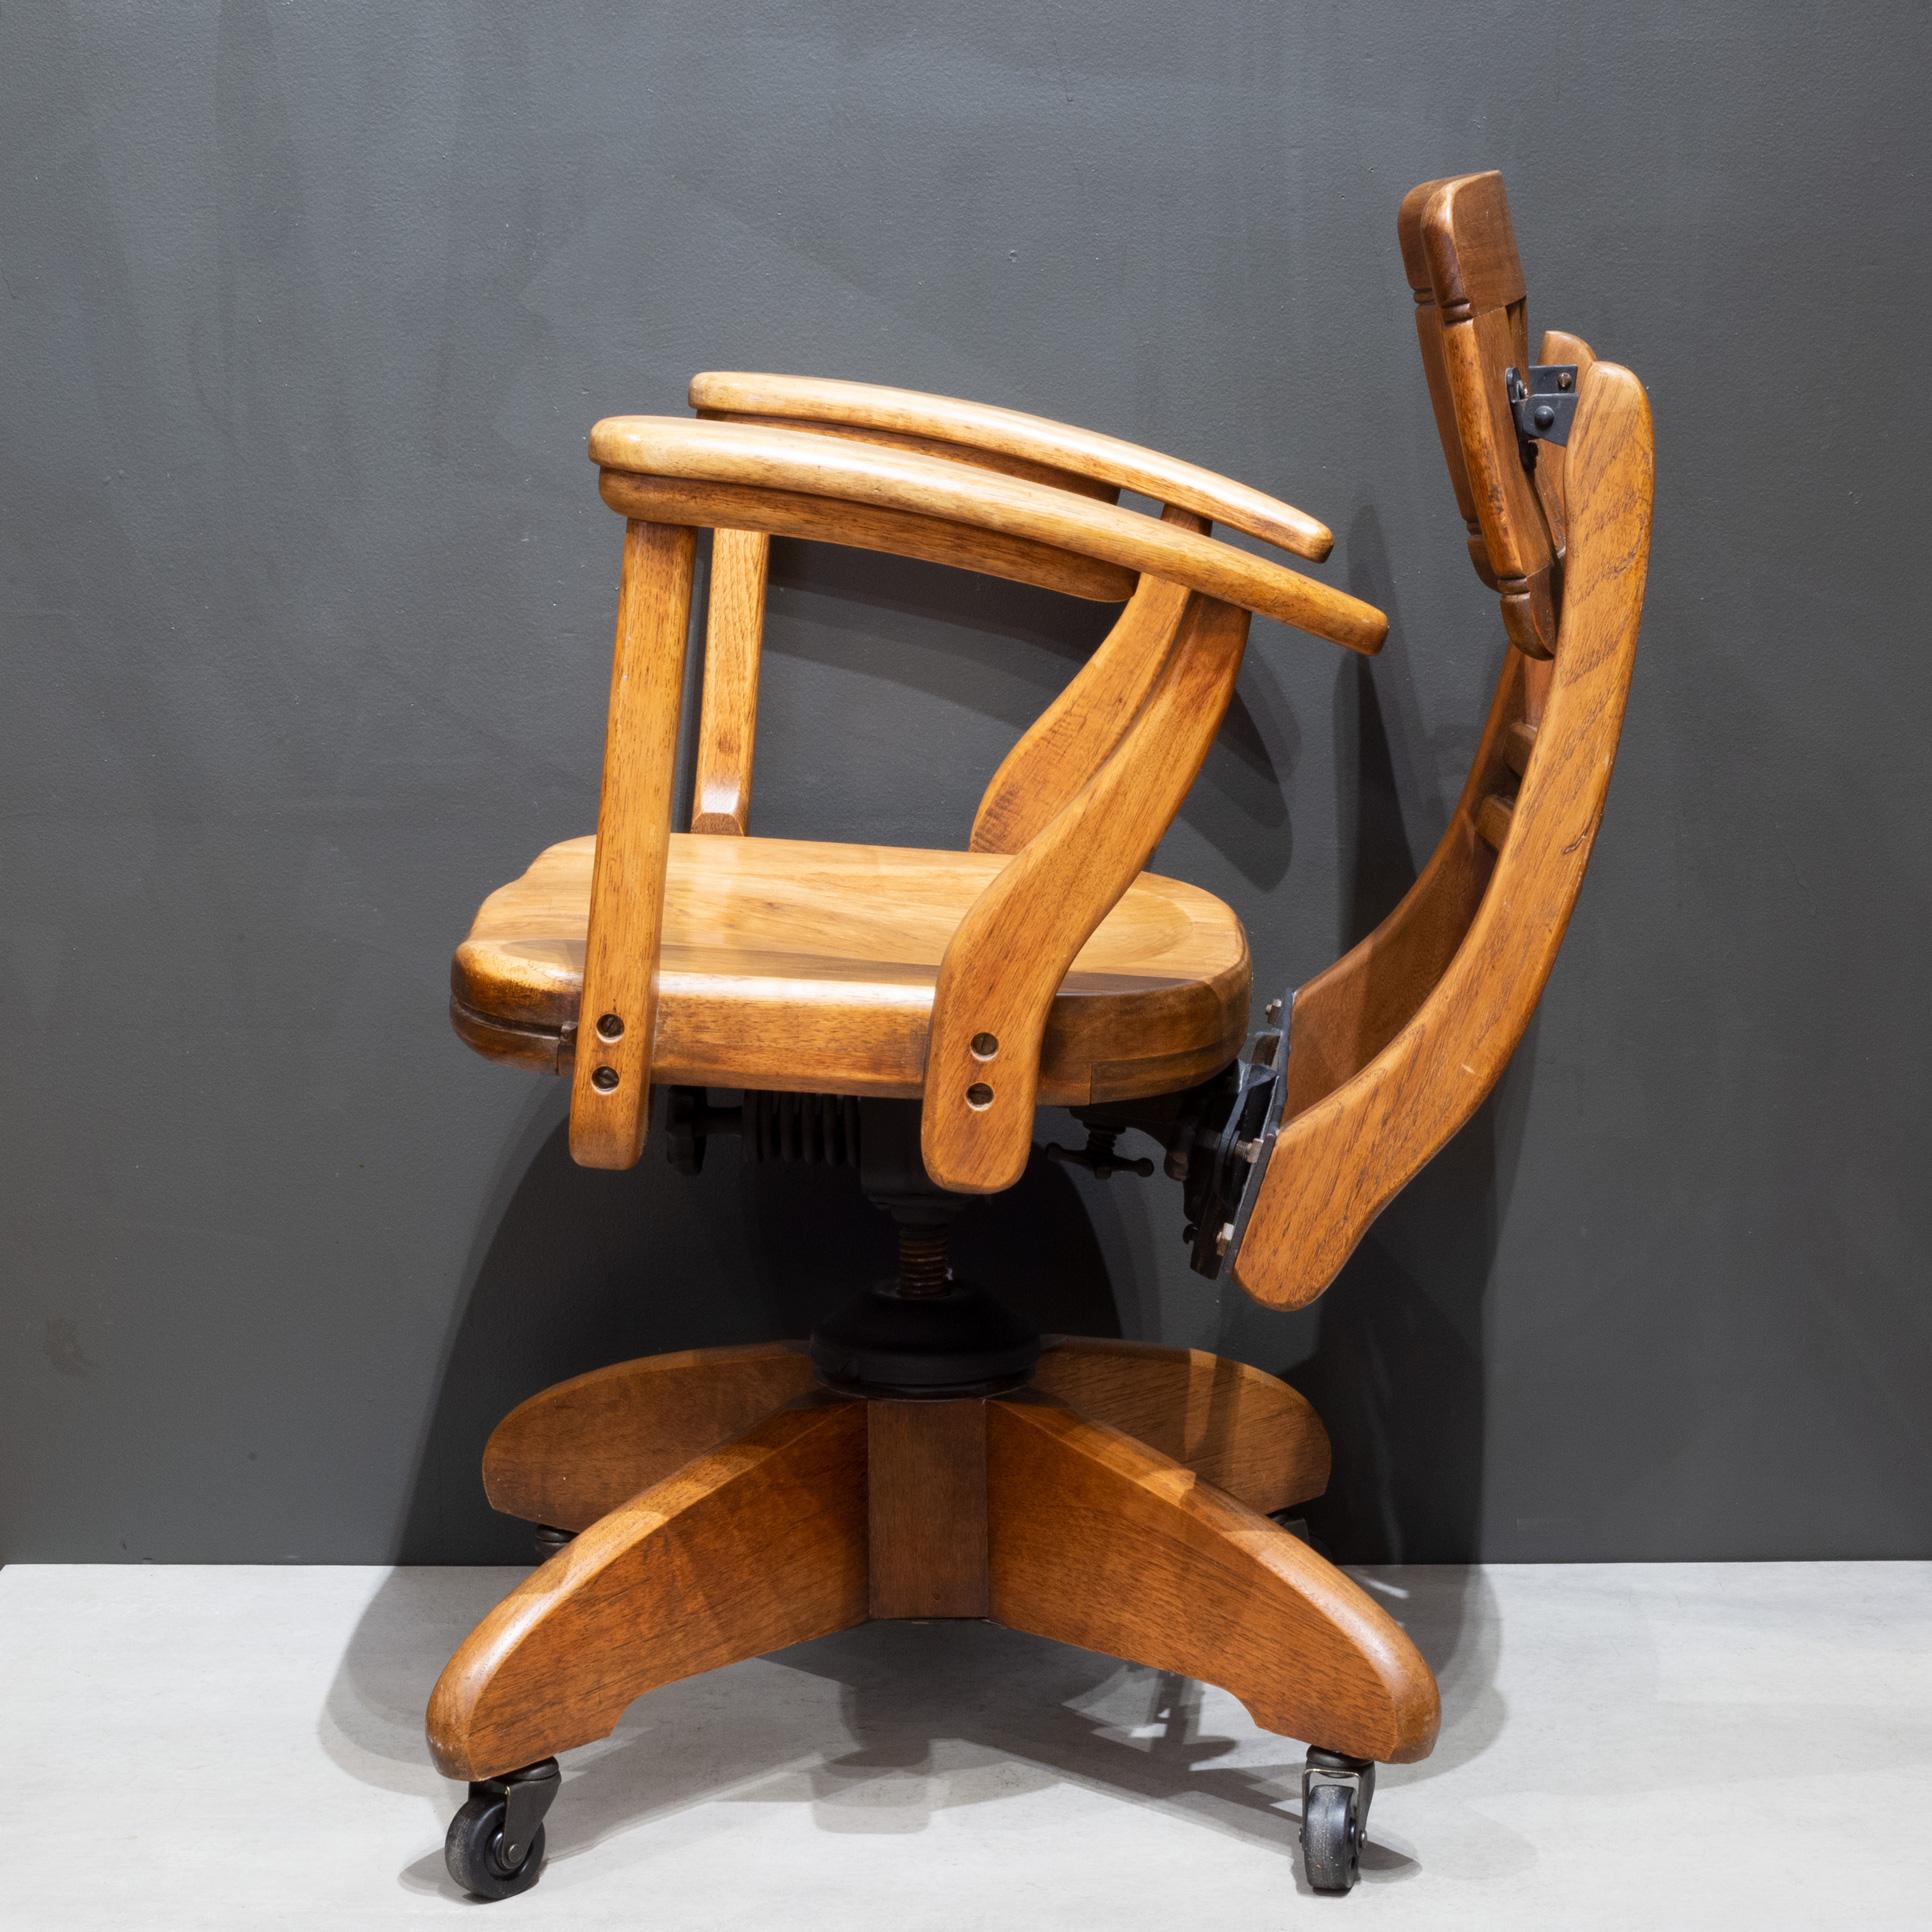 Cast Rare Antique Adjustable Swivel Oak Desk Chair with Floating Back Rest c.1926 For Sale